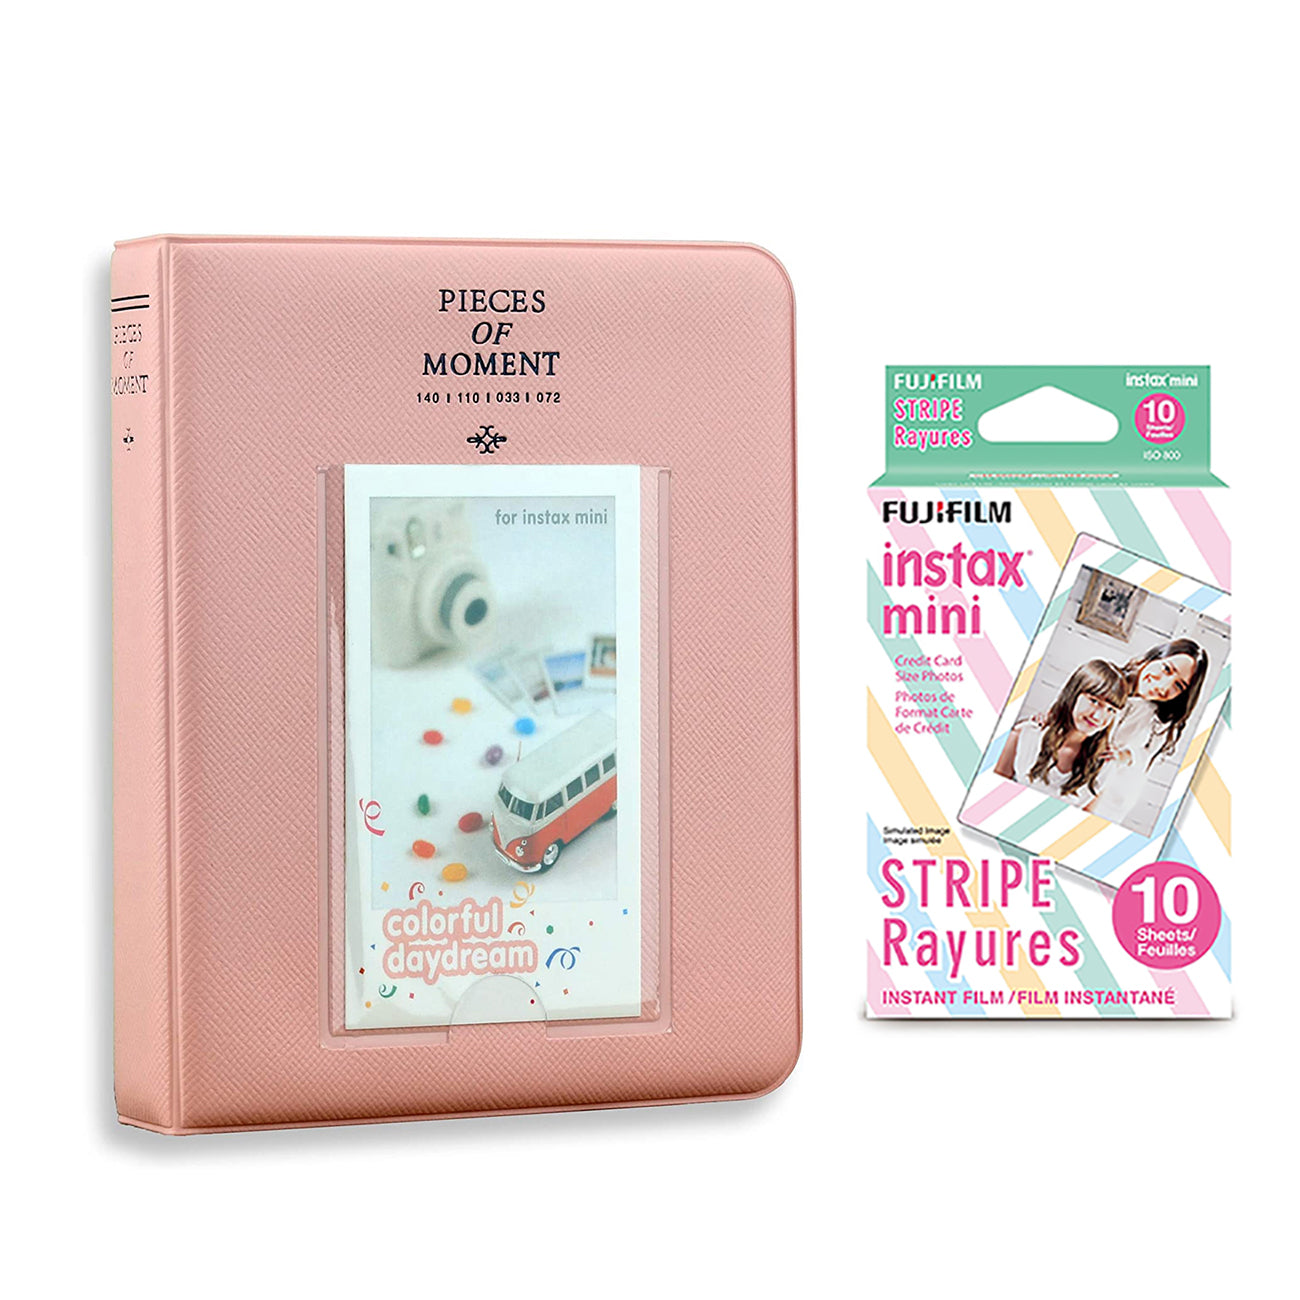 Fujifilm Instax Mini 10X1 stripe  Instant Film with Instax Time Photo Album 64 Sheets (blush pink)